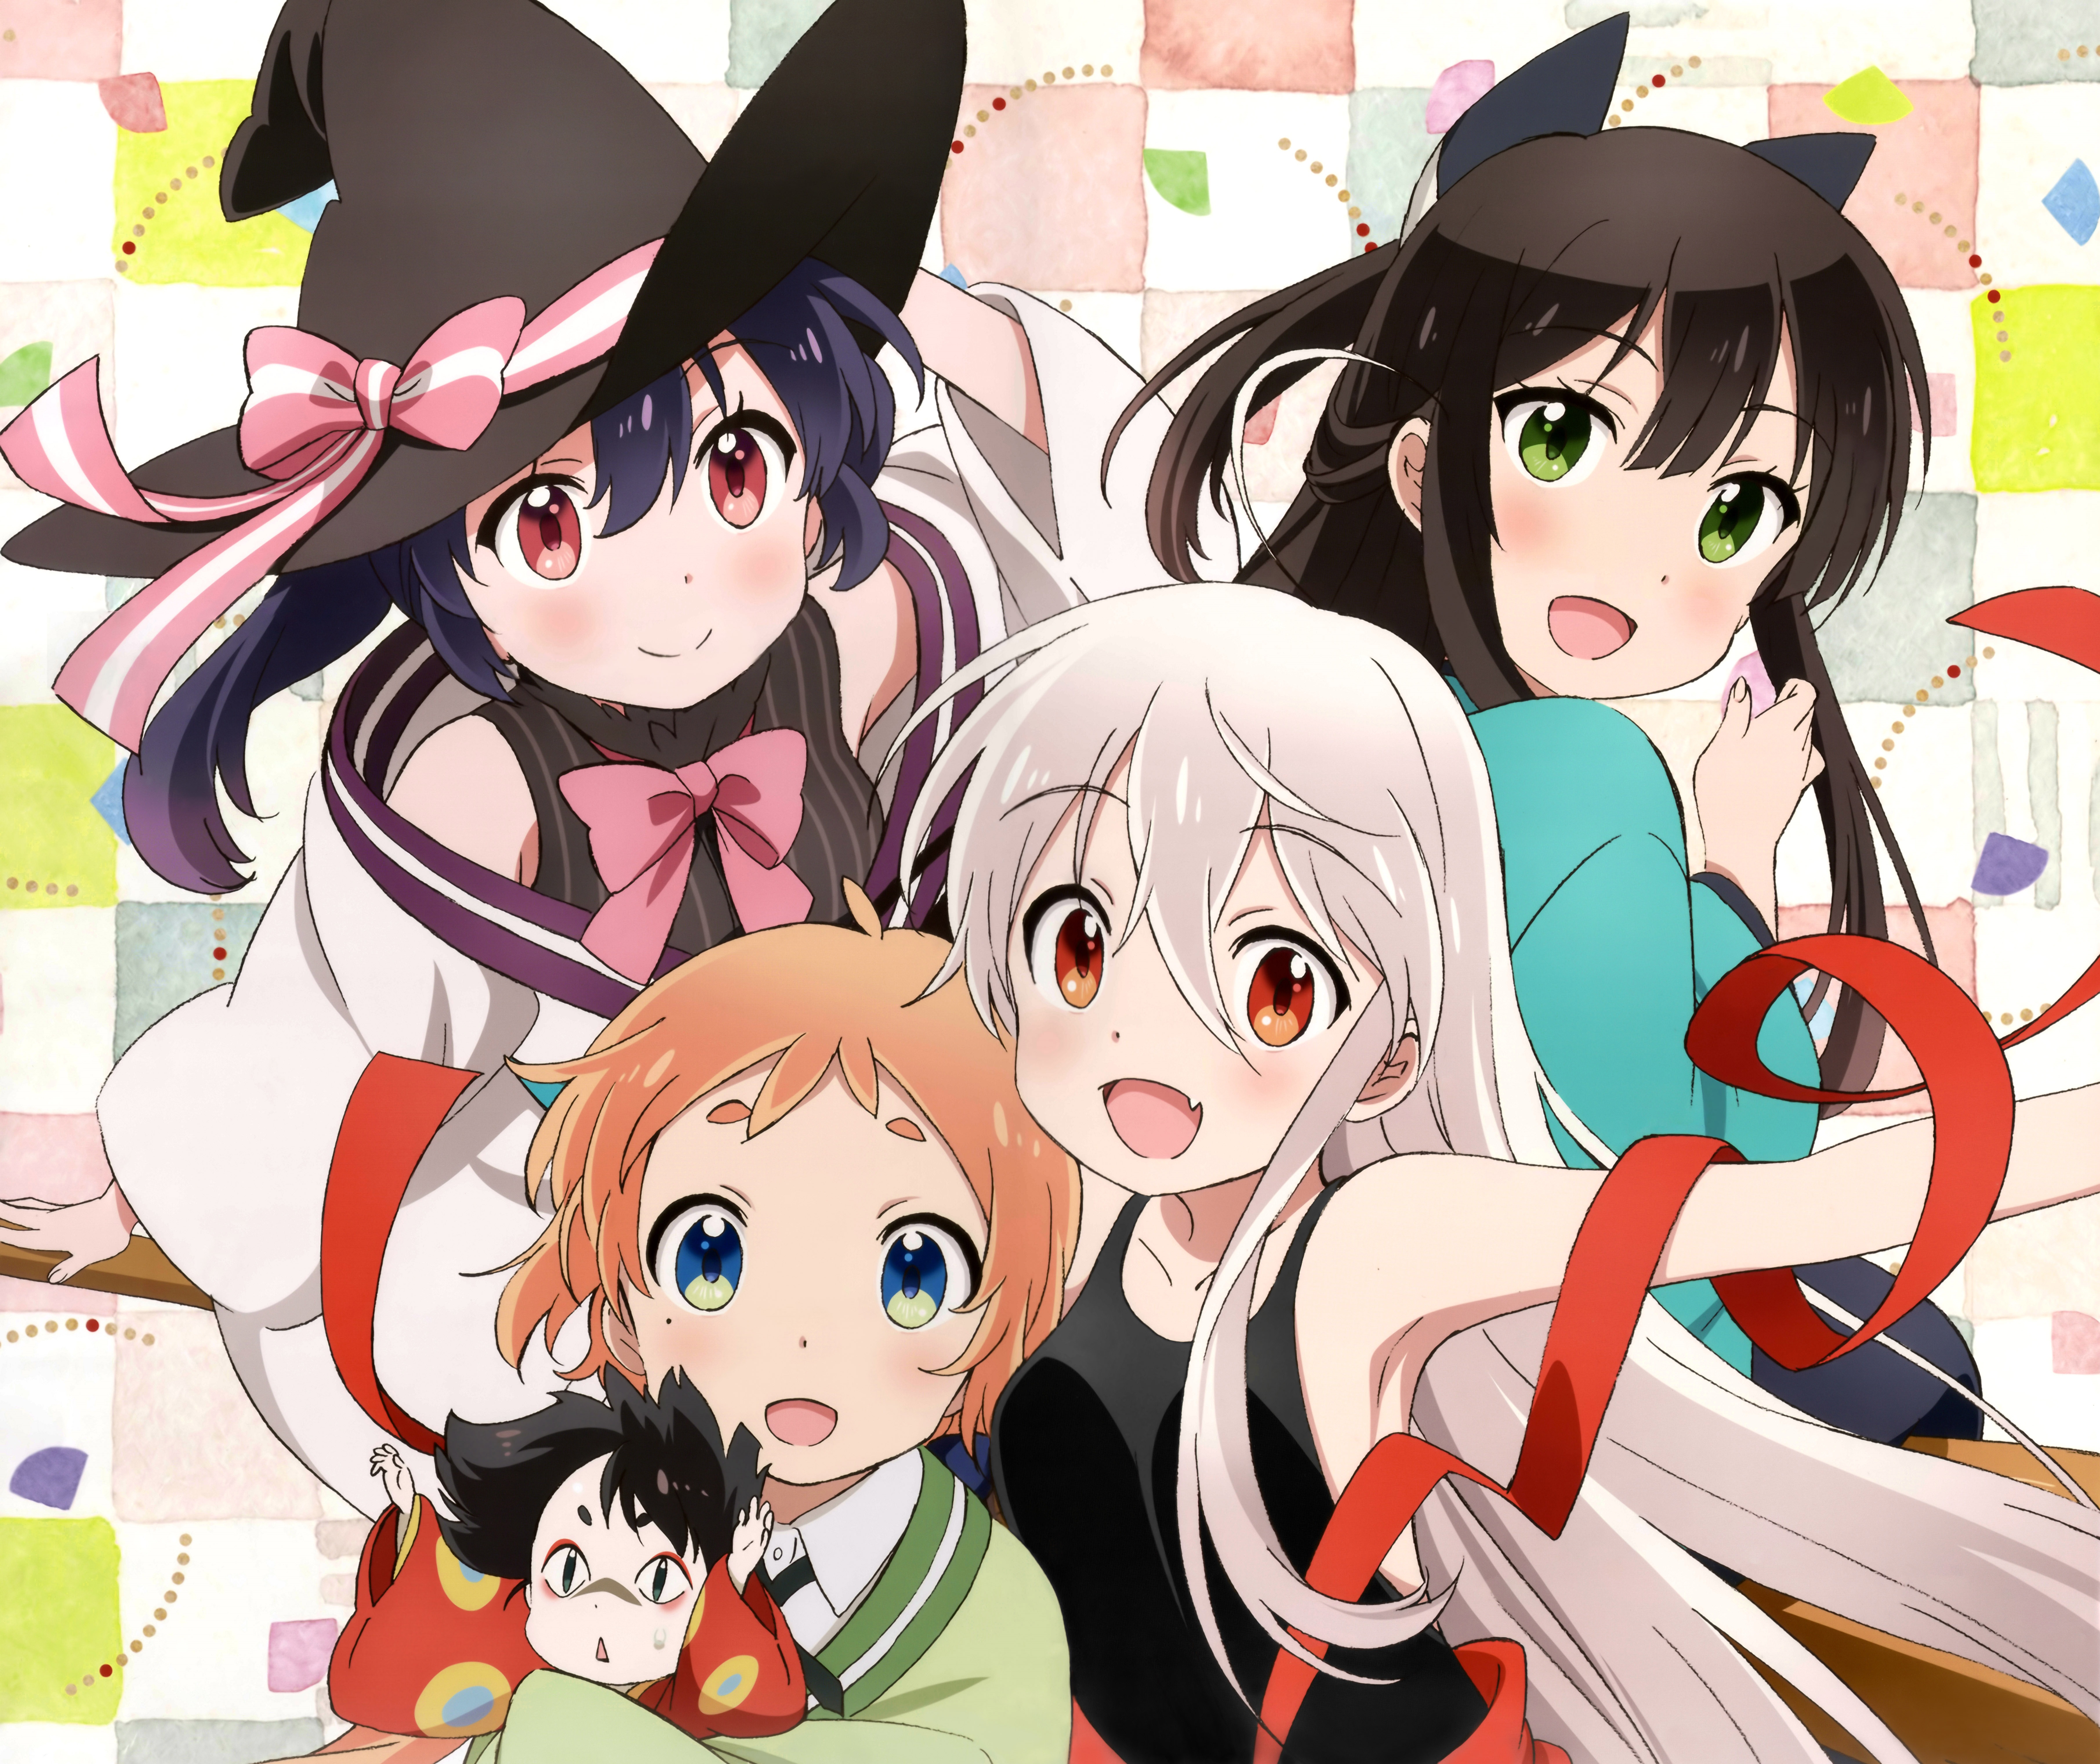 822599 Bild herunterladen animes, urara meirochō, chiya (urara meirochō), kon tatsumi, koume yukimi, nono natsume, hexe - Hintergrundbilder und Bildschirmschoner kostenlos